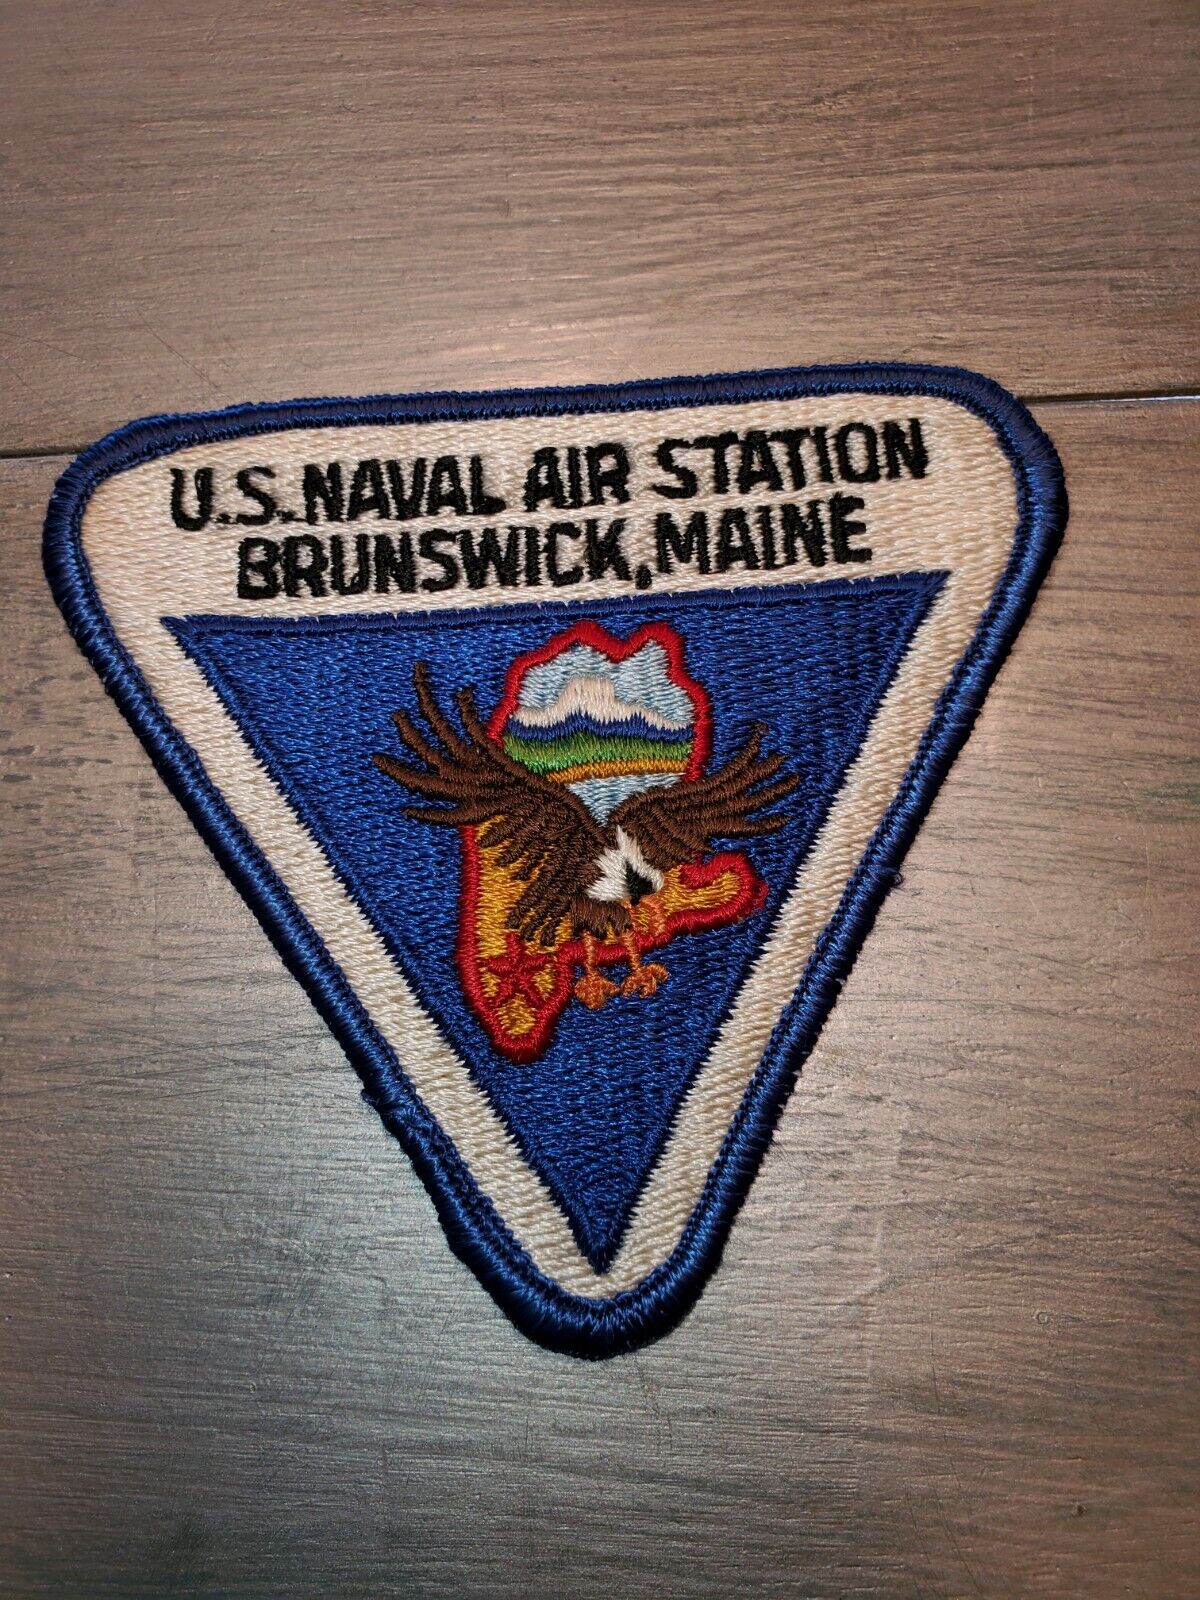 1960s 70s USN Navy Naval Air Squadron Brisnwick Maine Patch